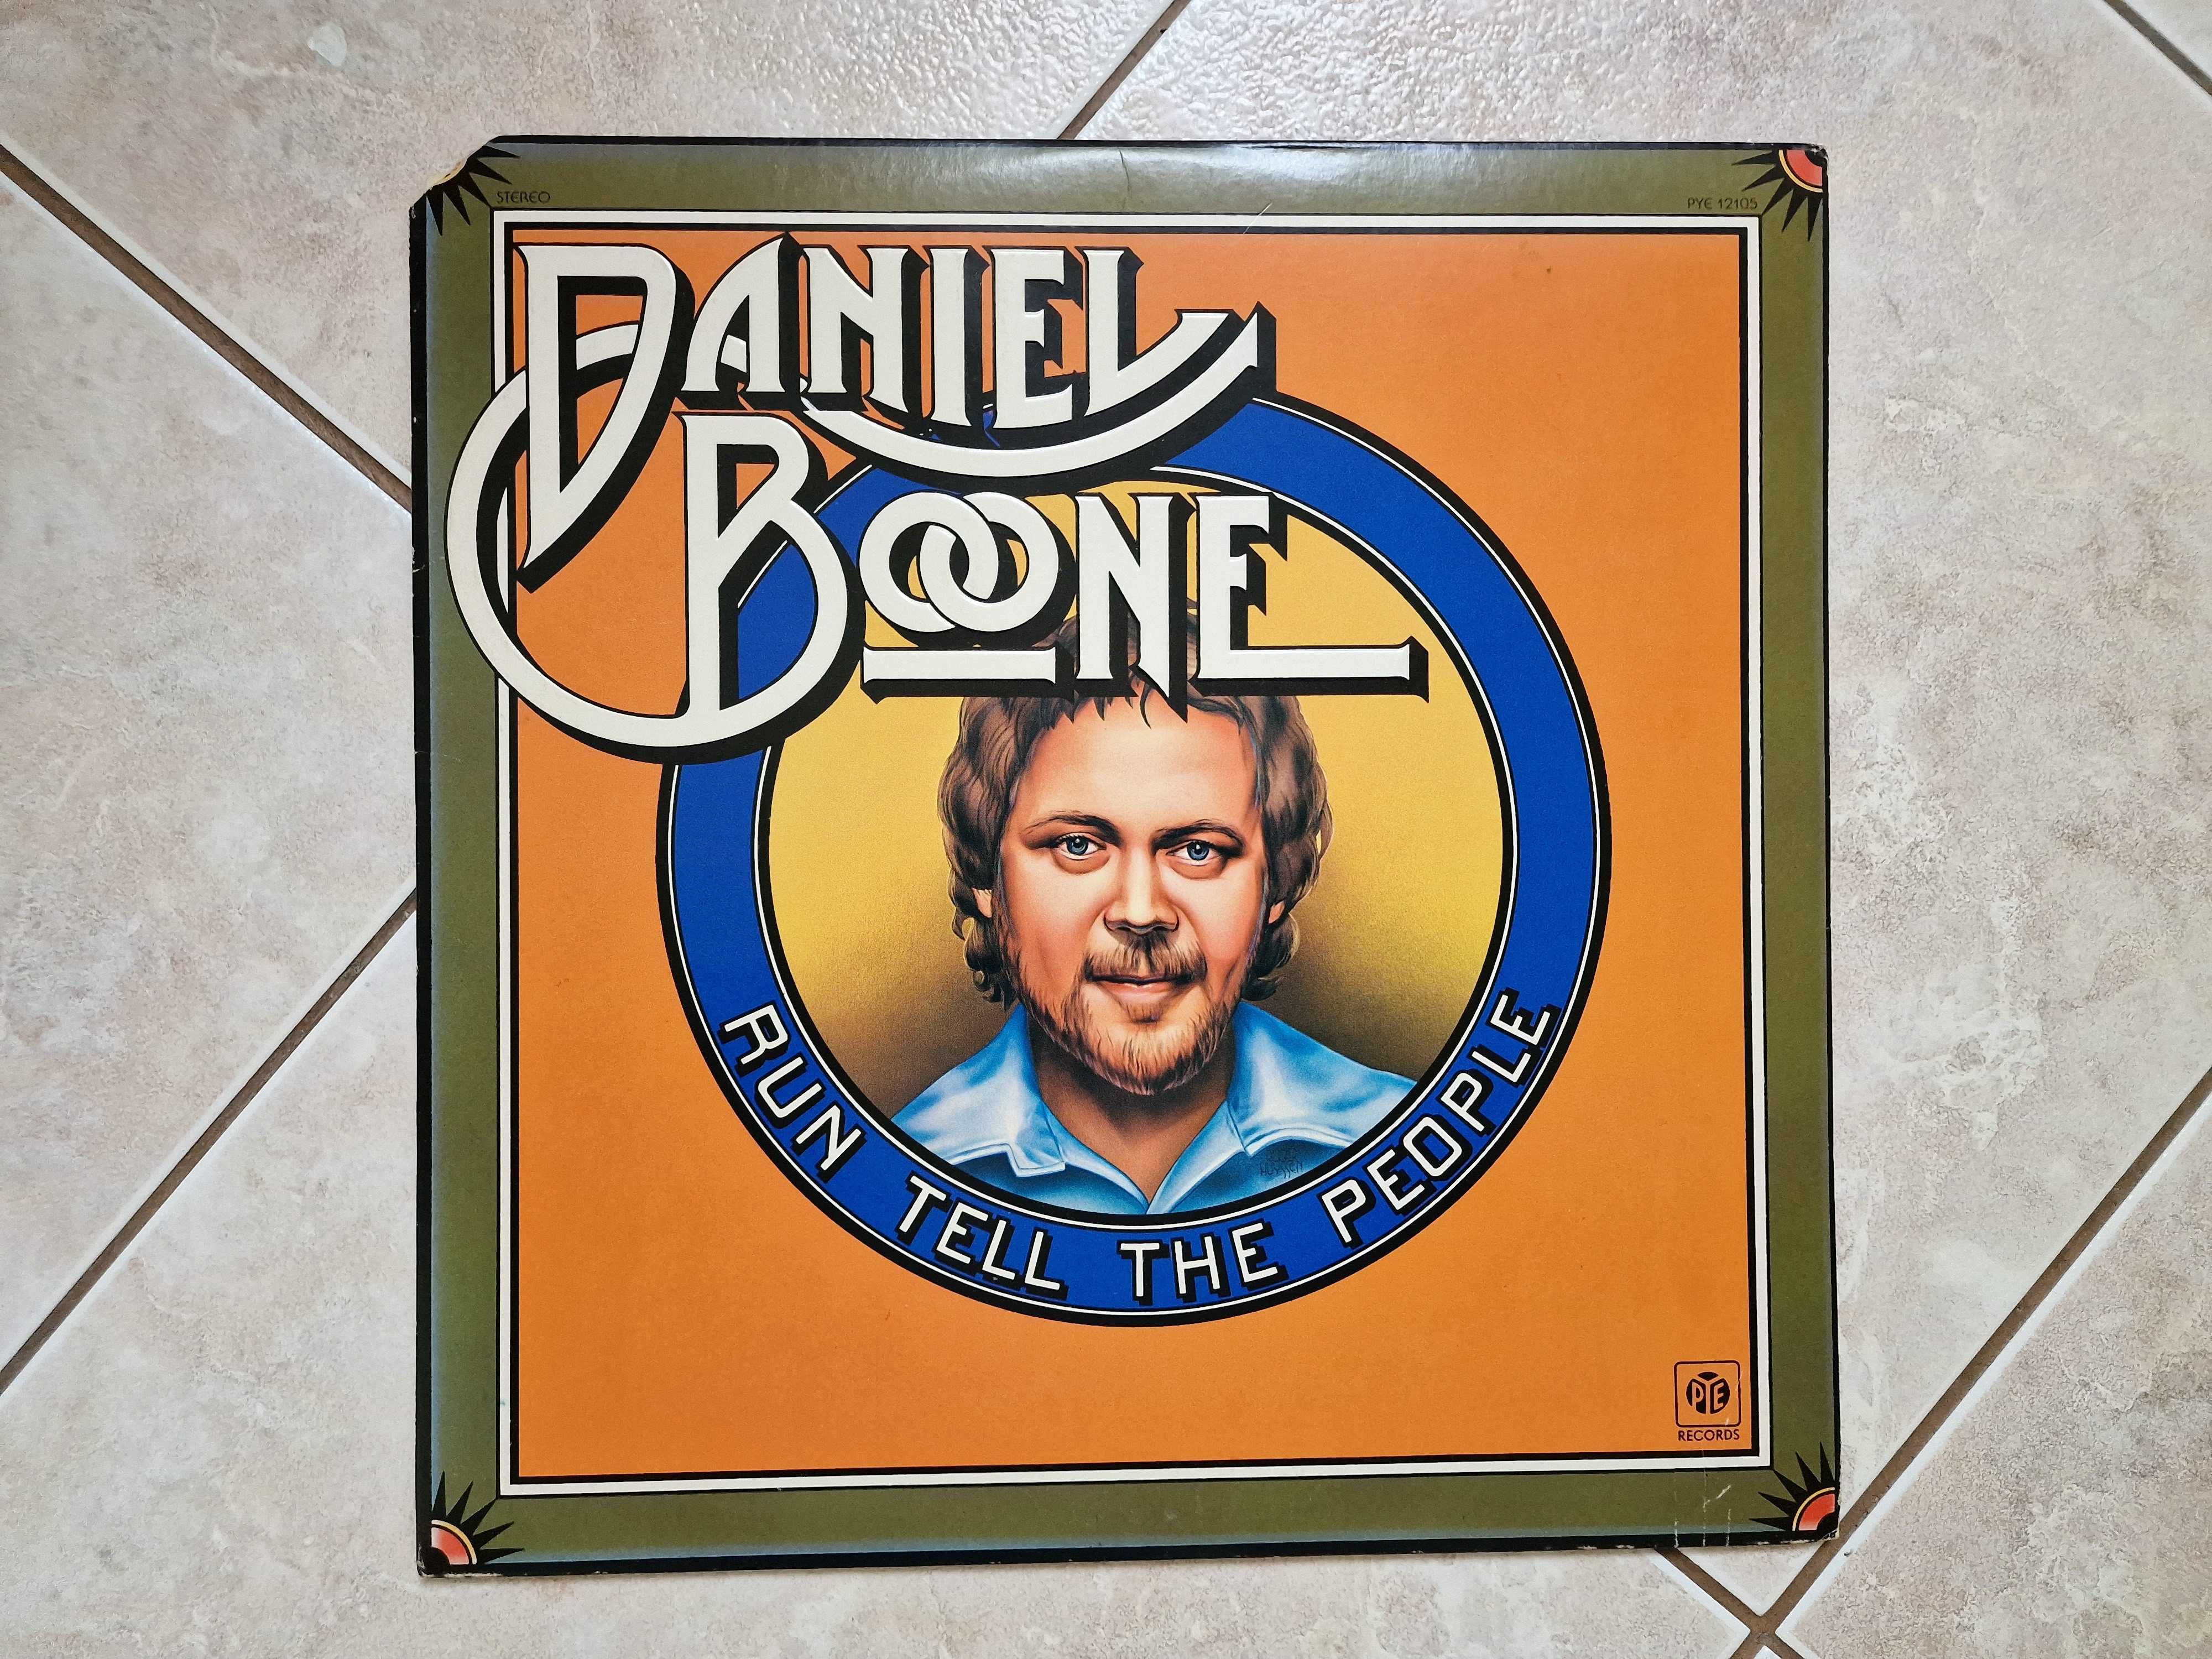 Płyta DANIEL BOONE   LP  Winyl      Penny Farting Records USA  1975